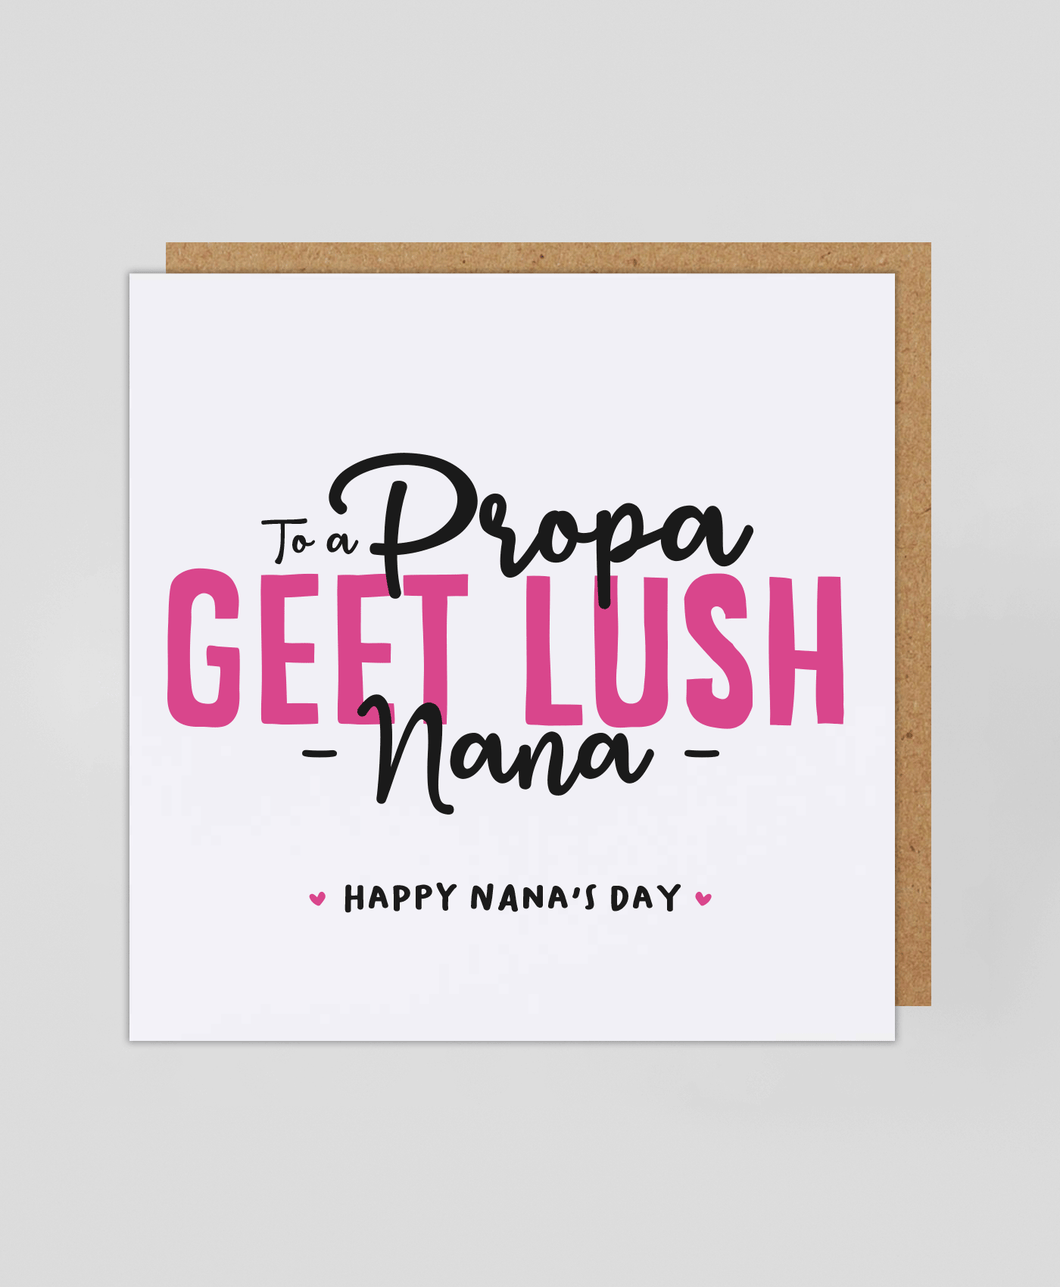 Geet Lush Nana - Greetings Card